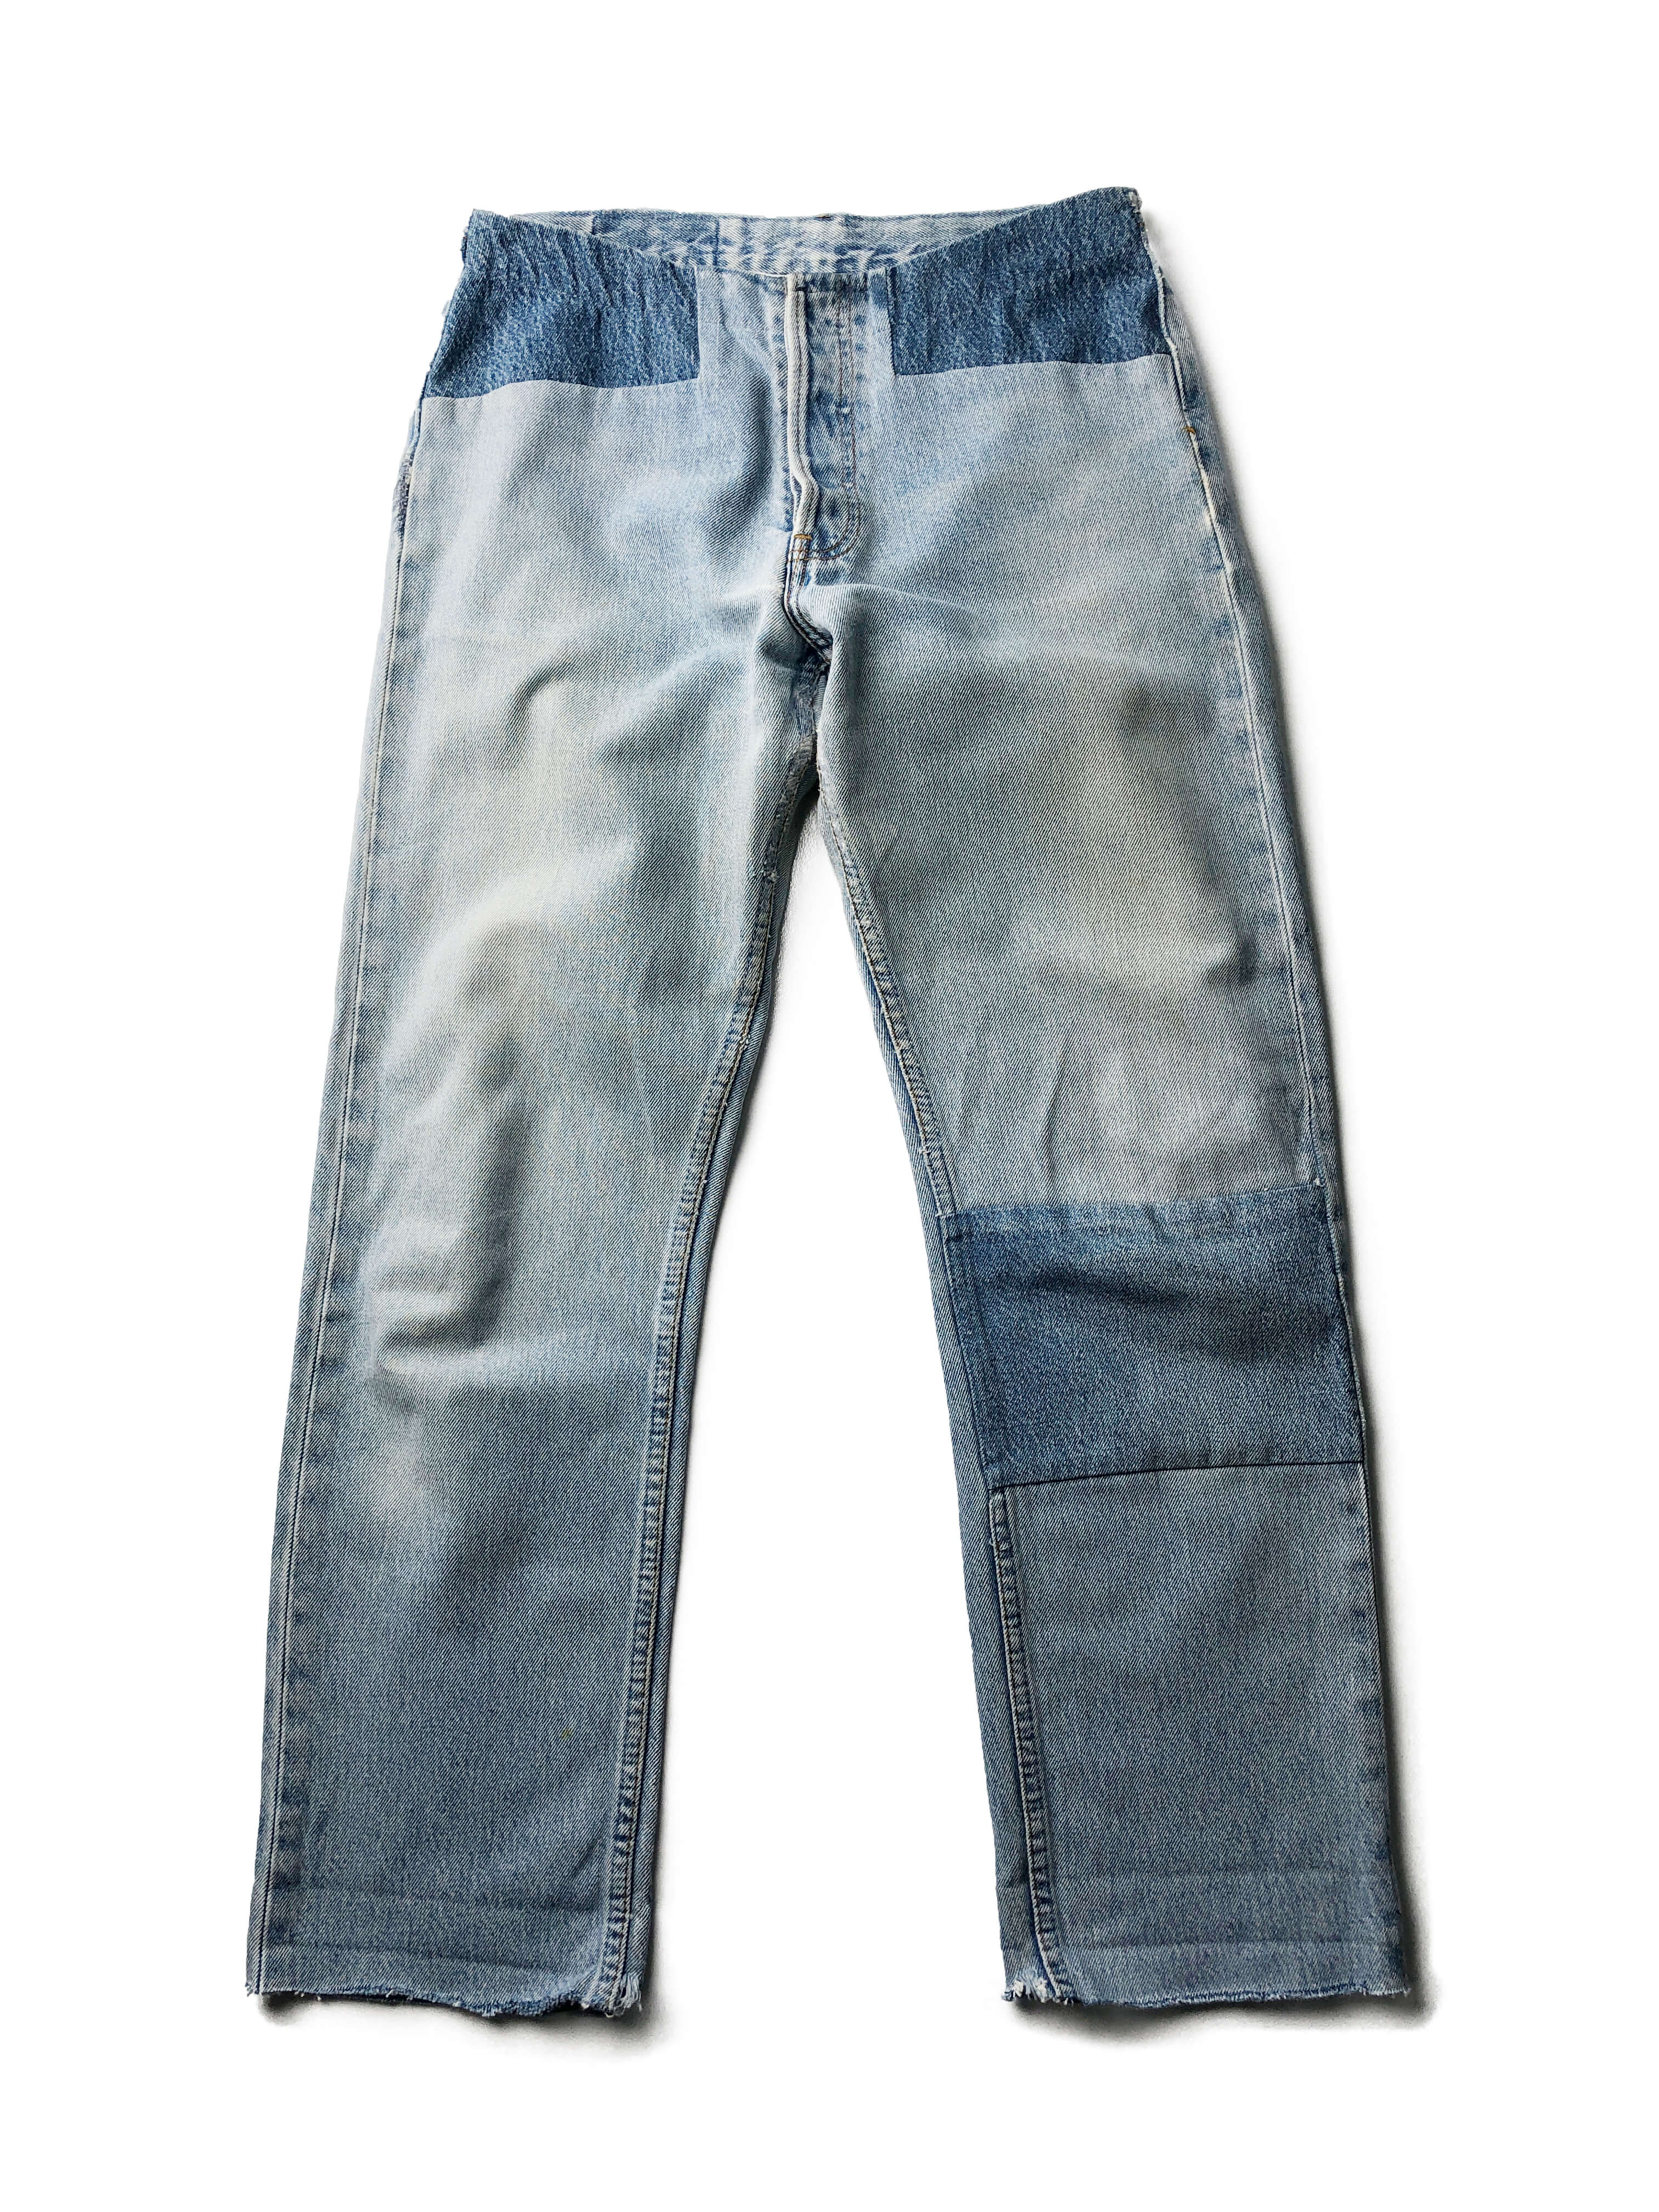 Maison Martin Margiela 1998fw artisanal jeans